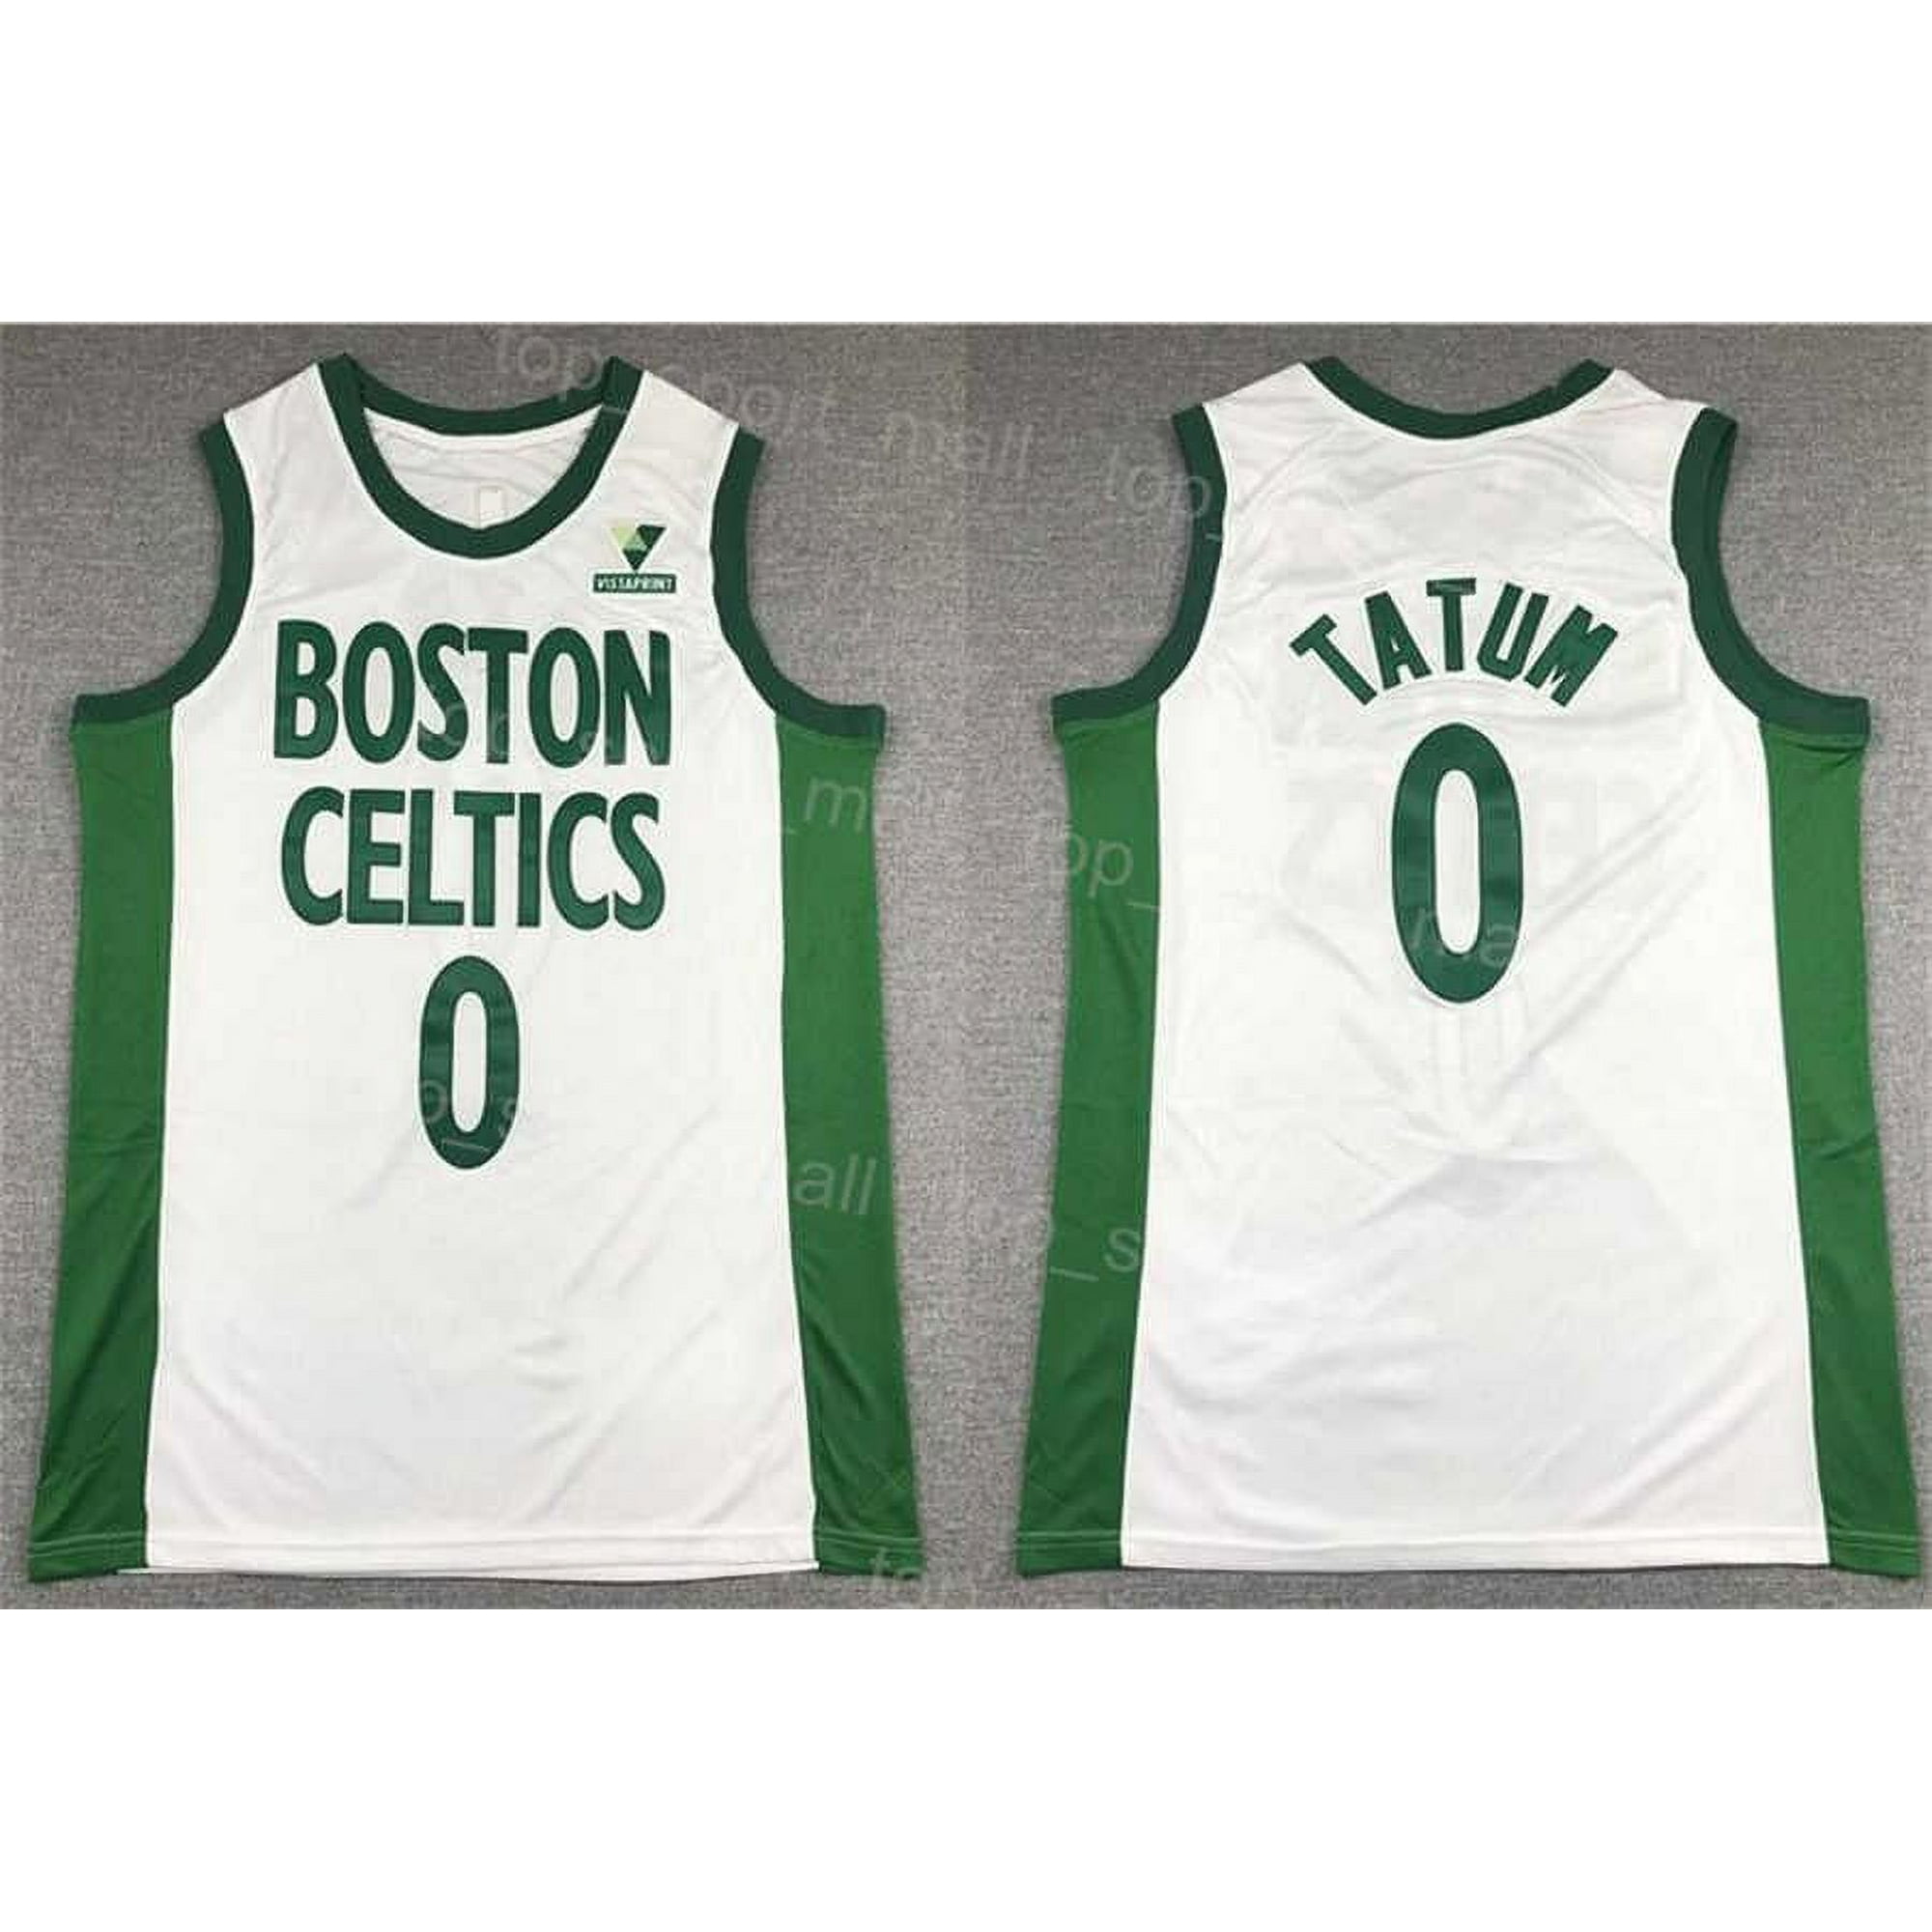 boston celtics jersey black green